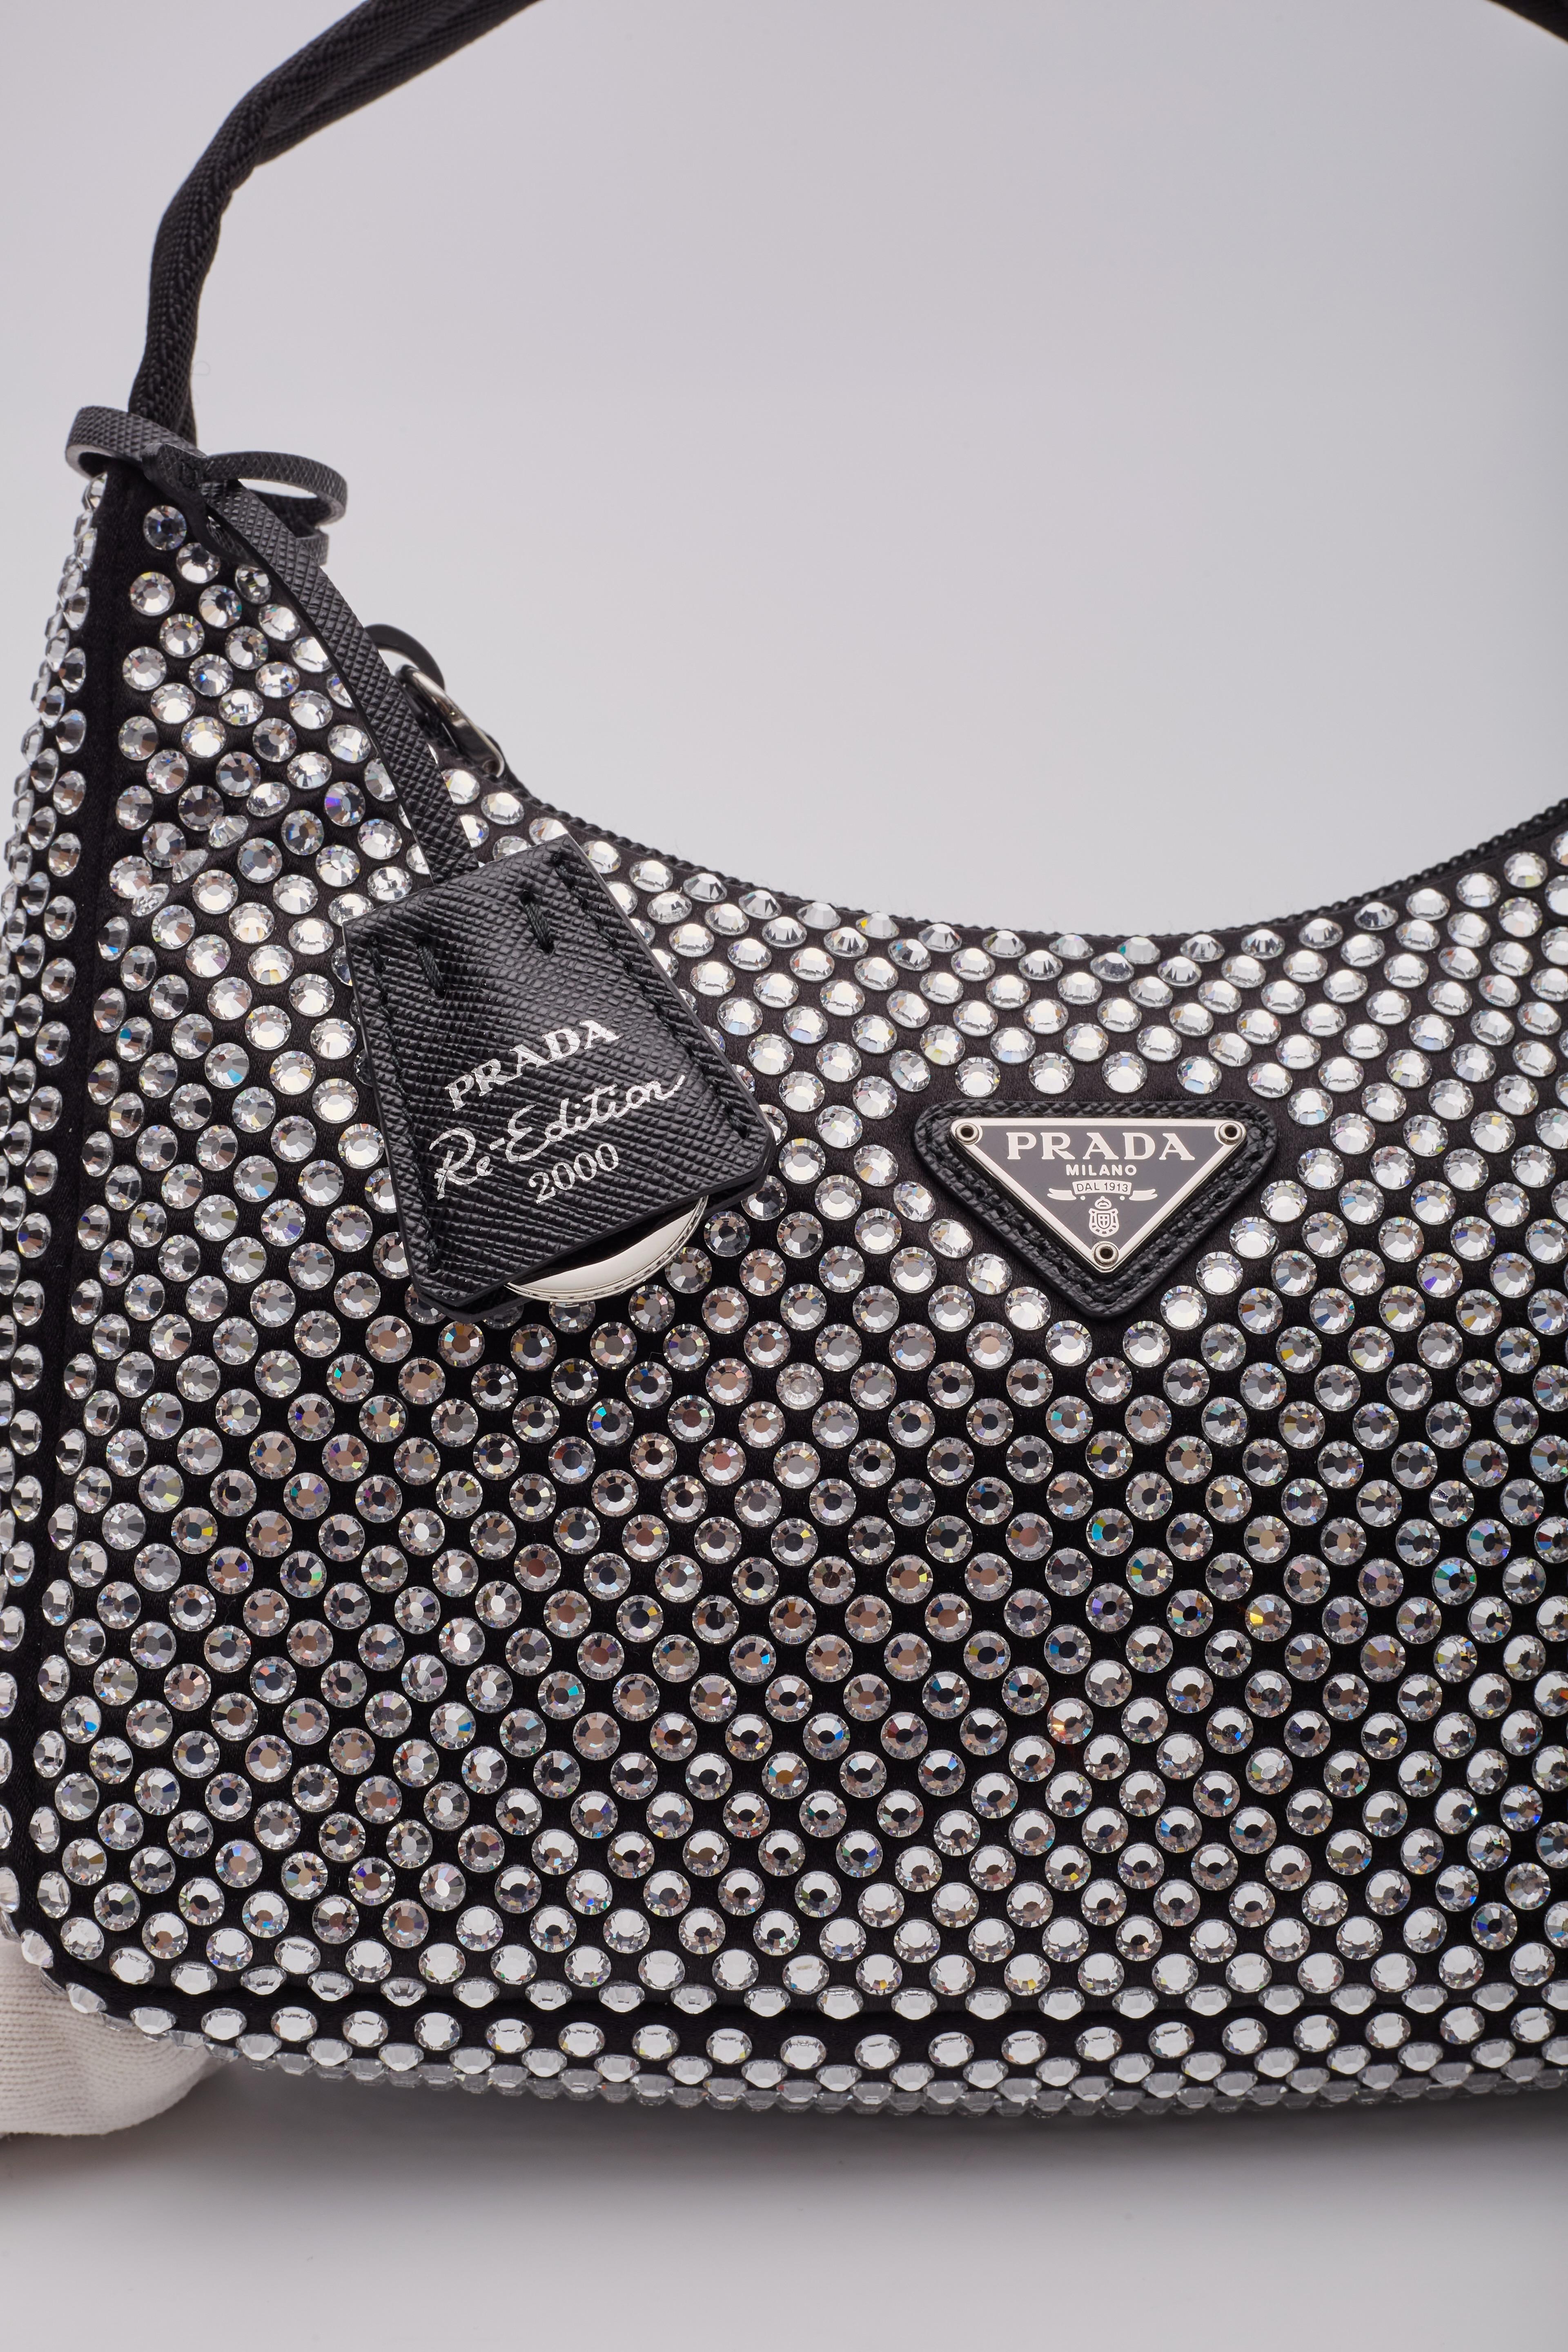 Prada Black Satin Crystal Mini Re-edition 2000 Bag For Sale 4